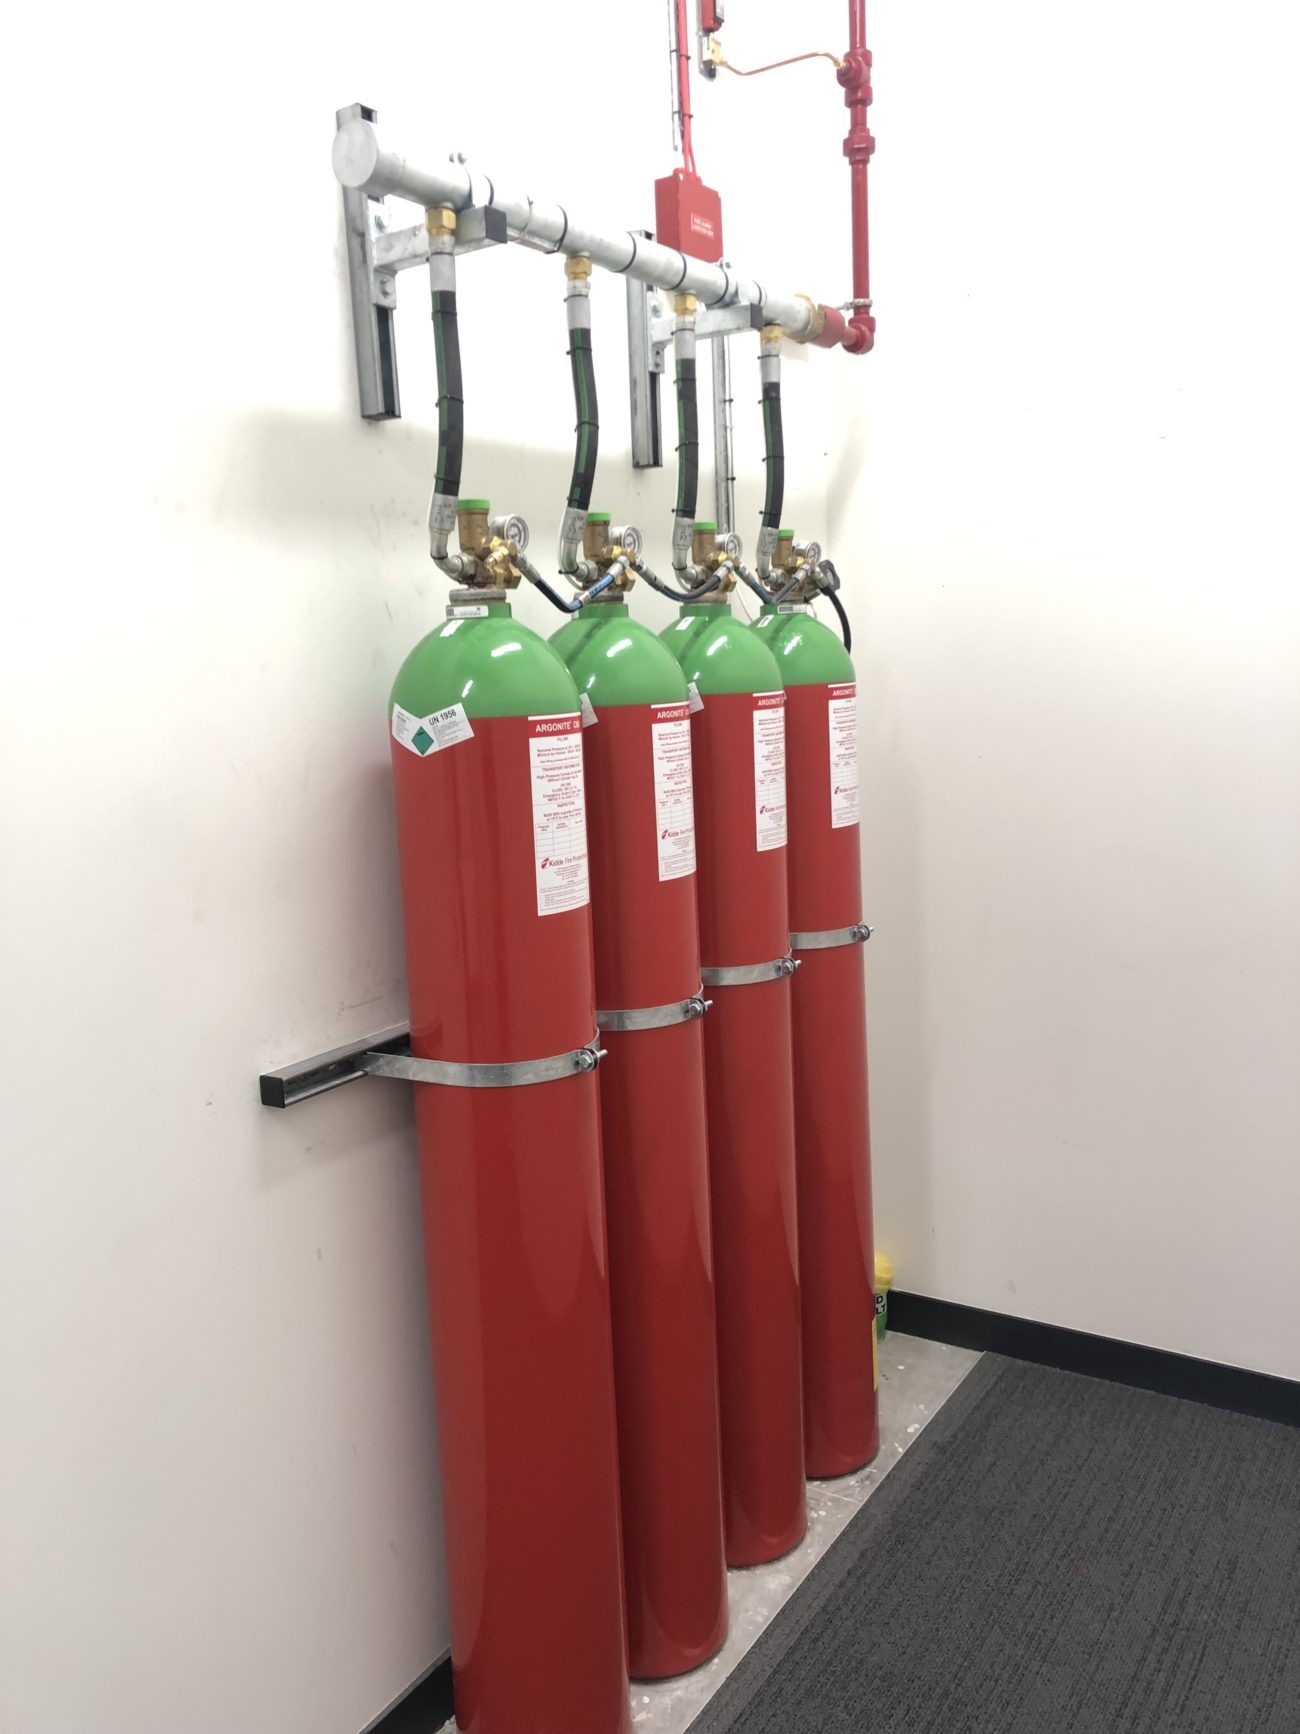 66 New Aerosol fire suppression system design 